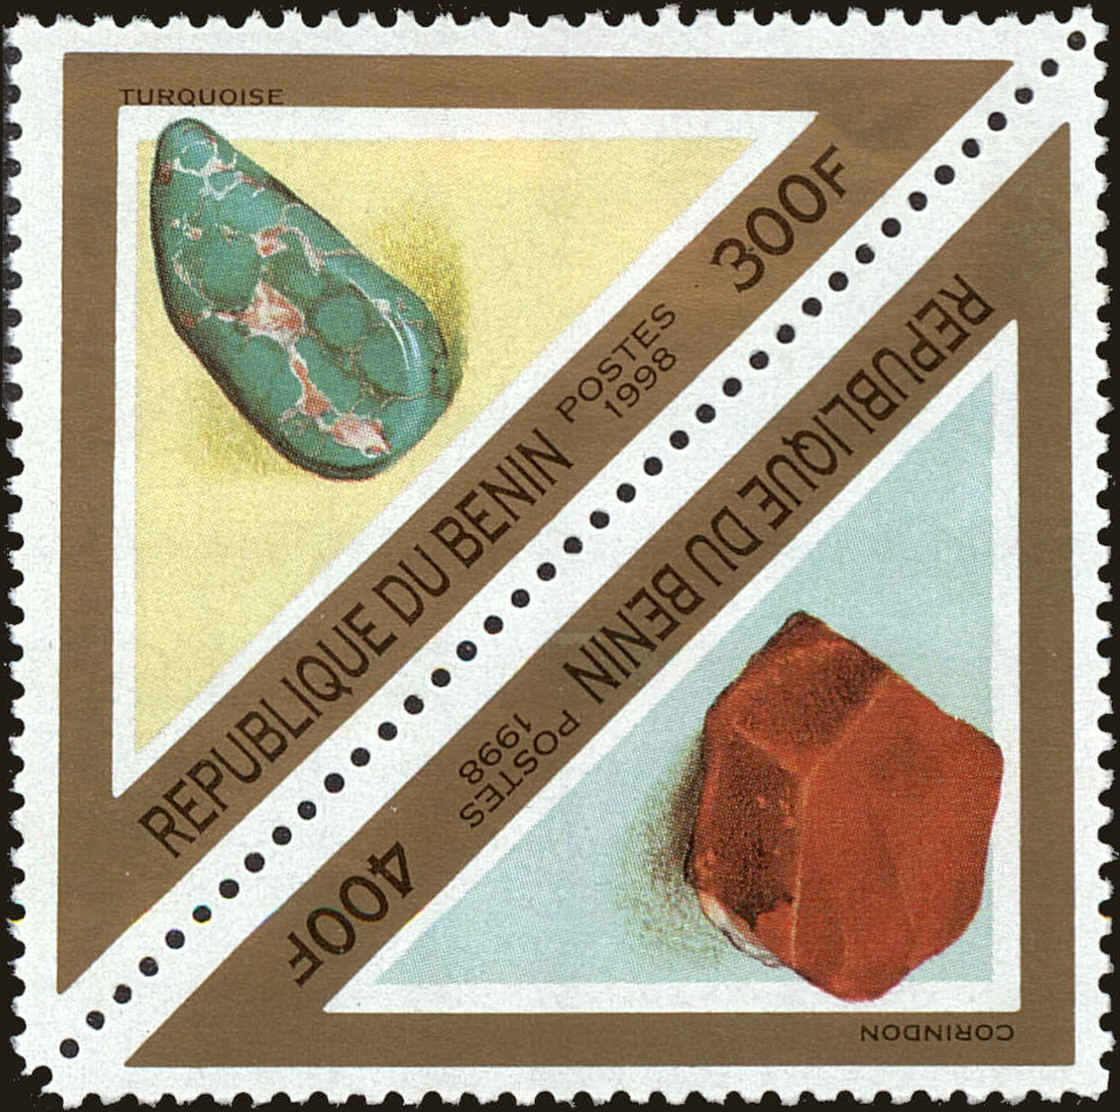 Front view of Benin 1071 collectors stamp